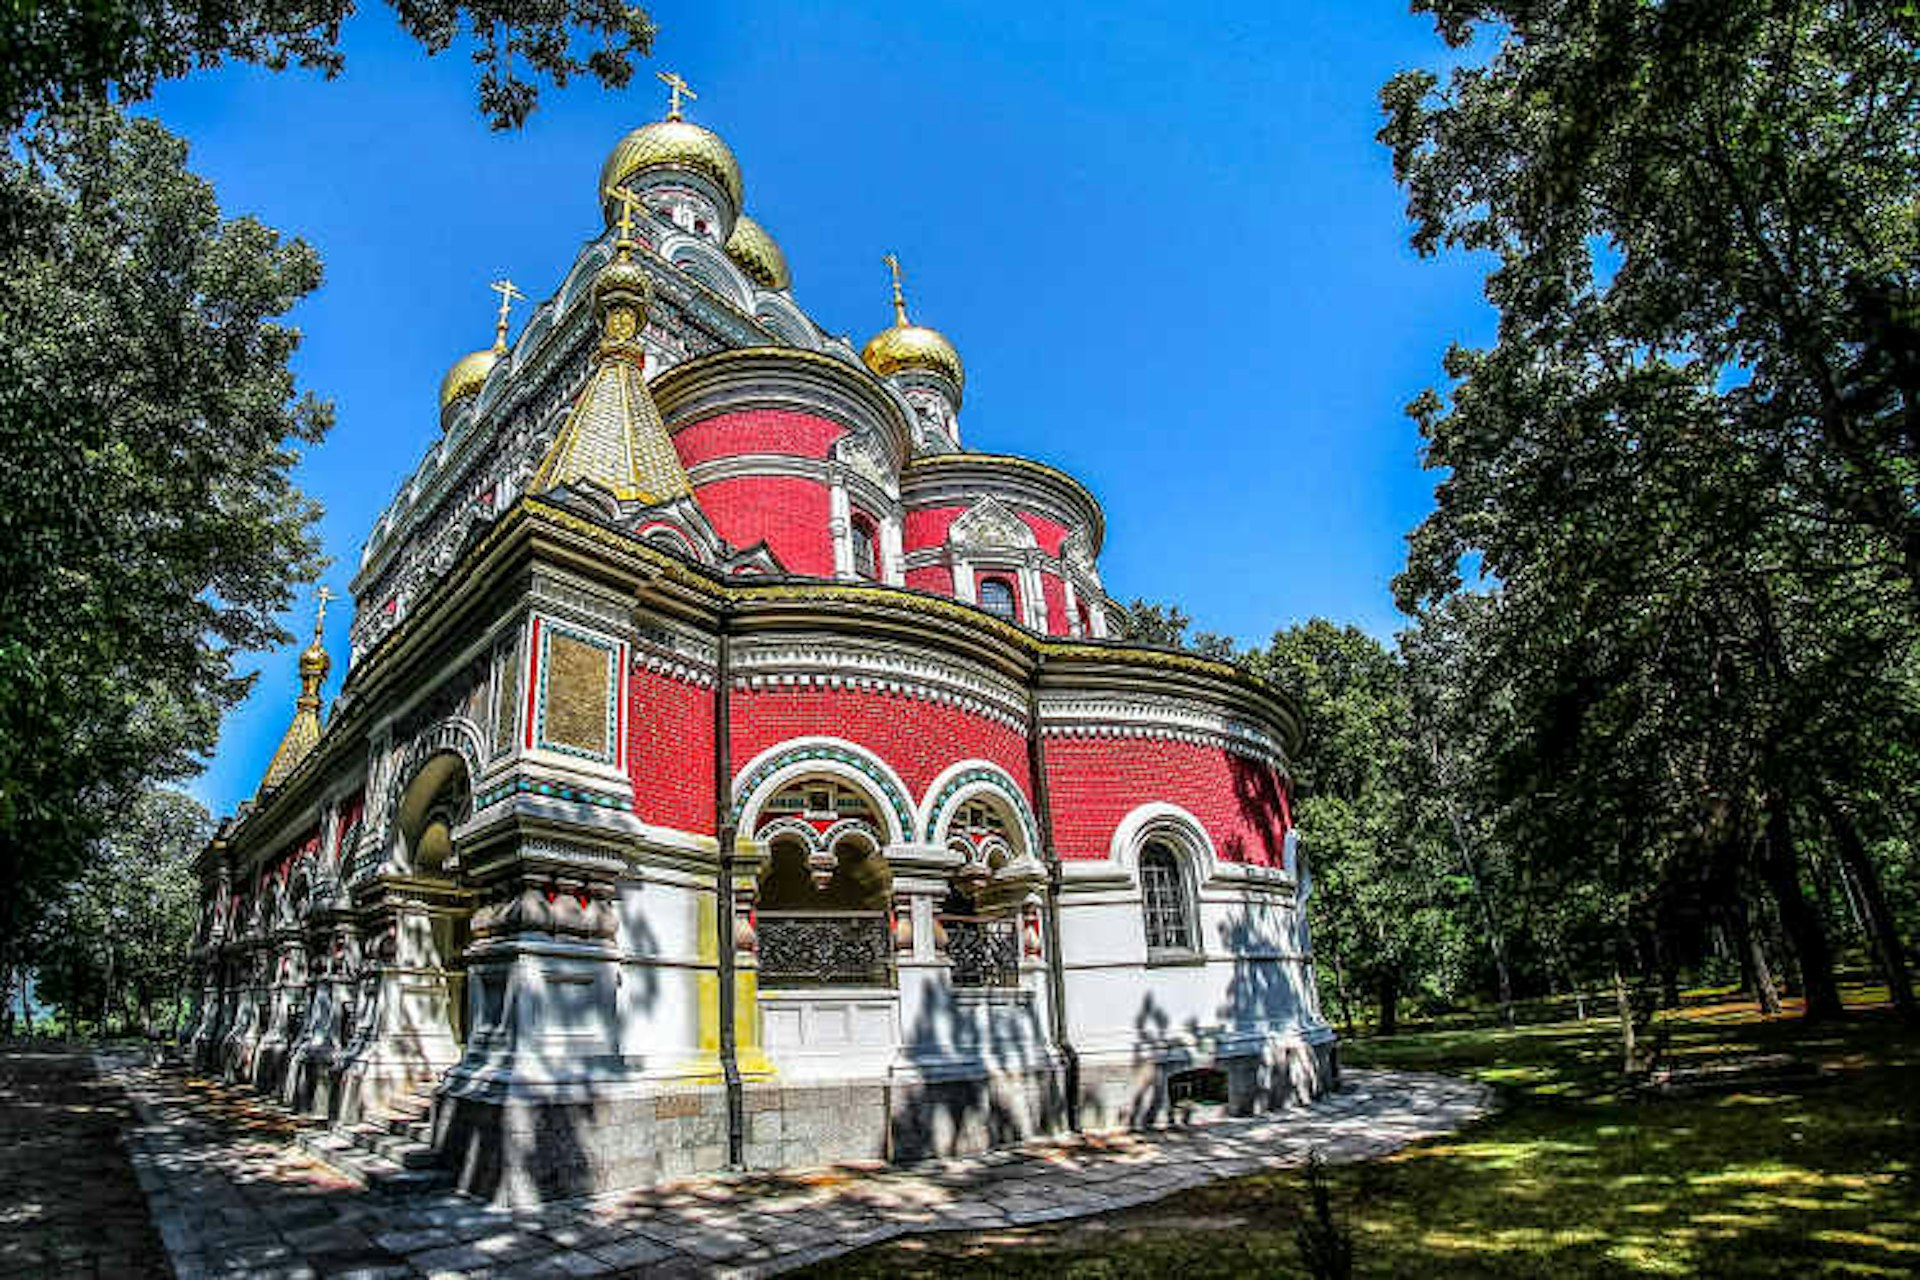 The vibrant Shipka memorial church. Image by KamrenB Photography / CC BY 2.0